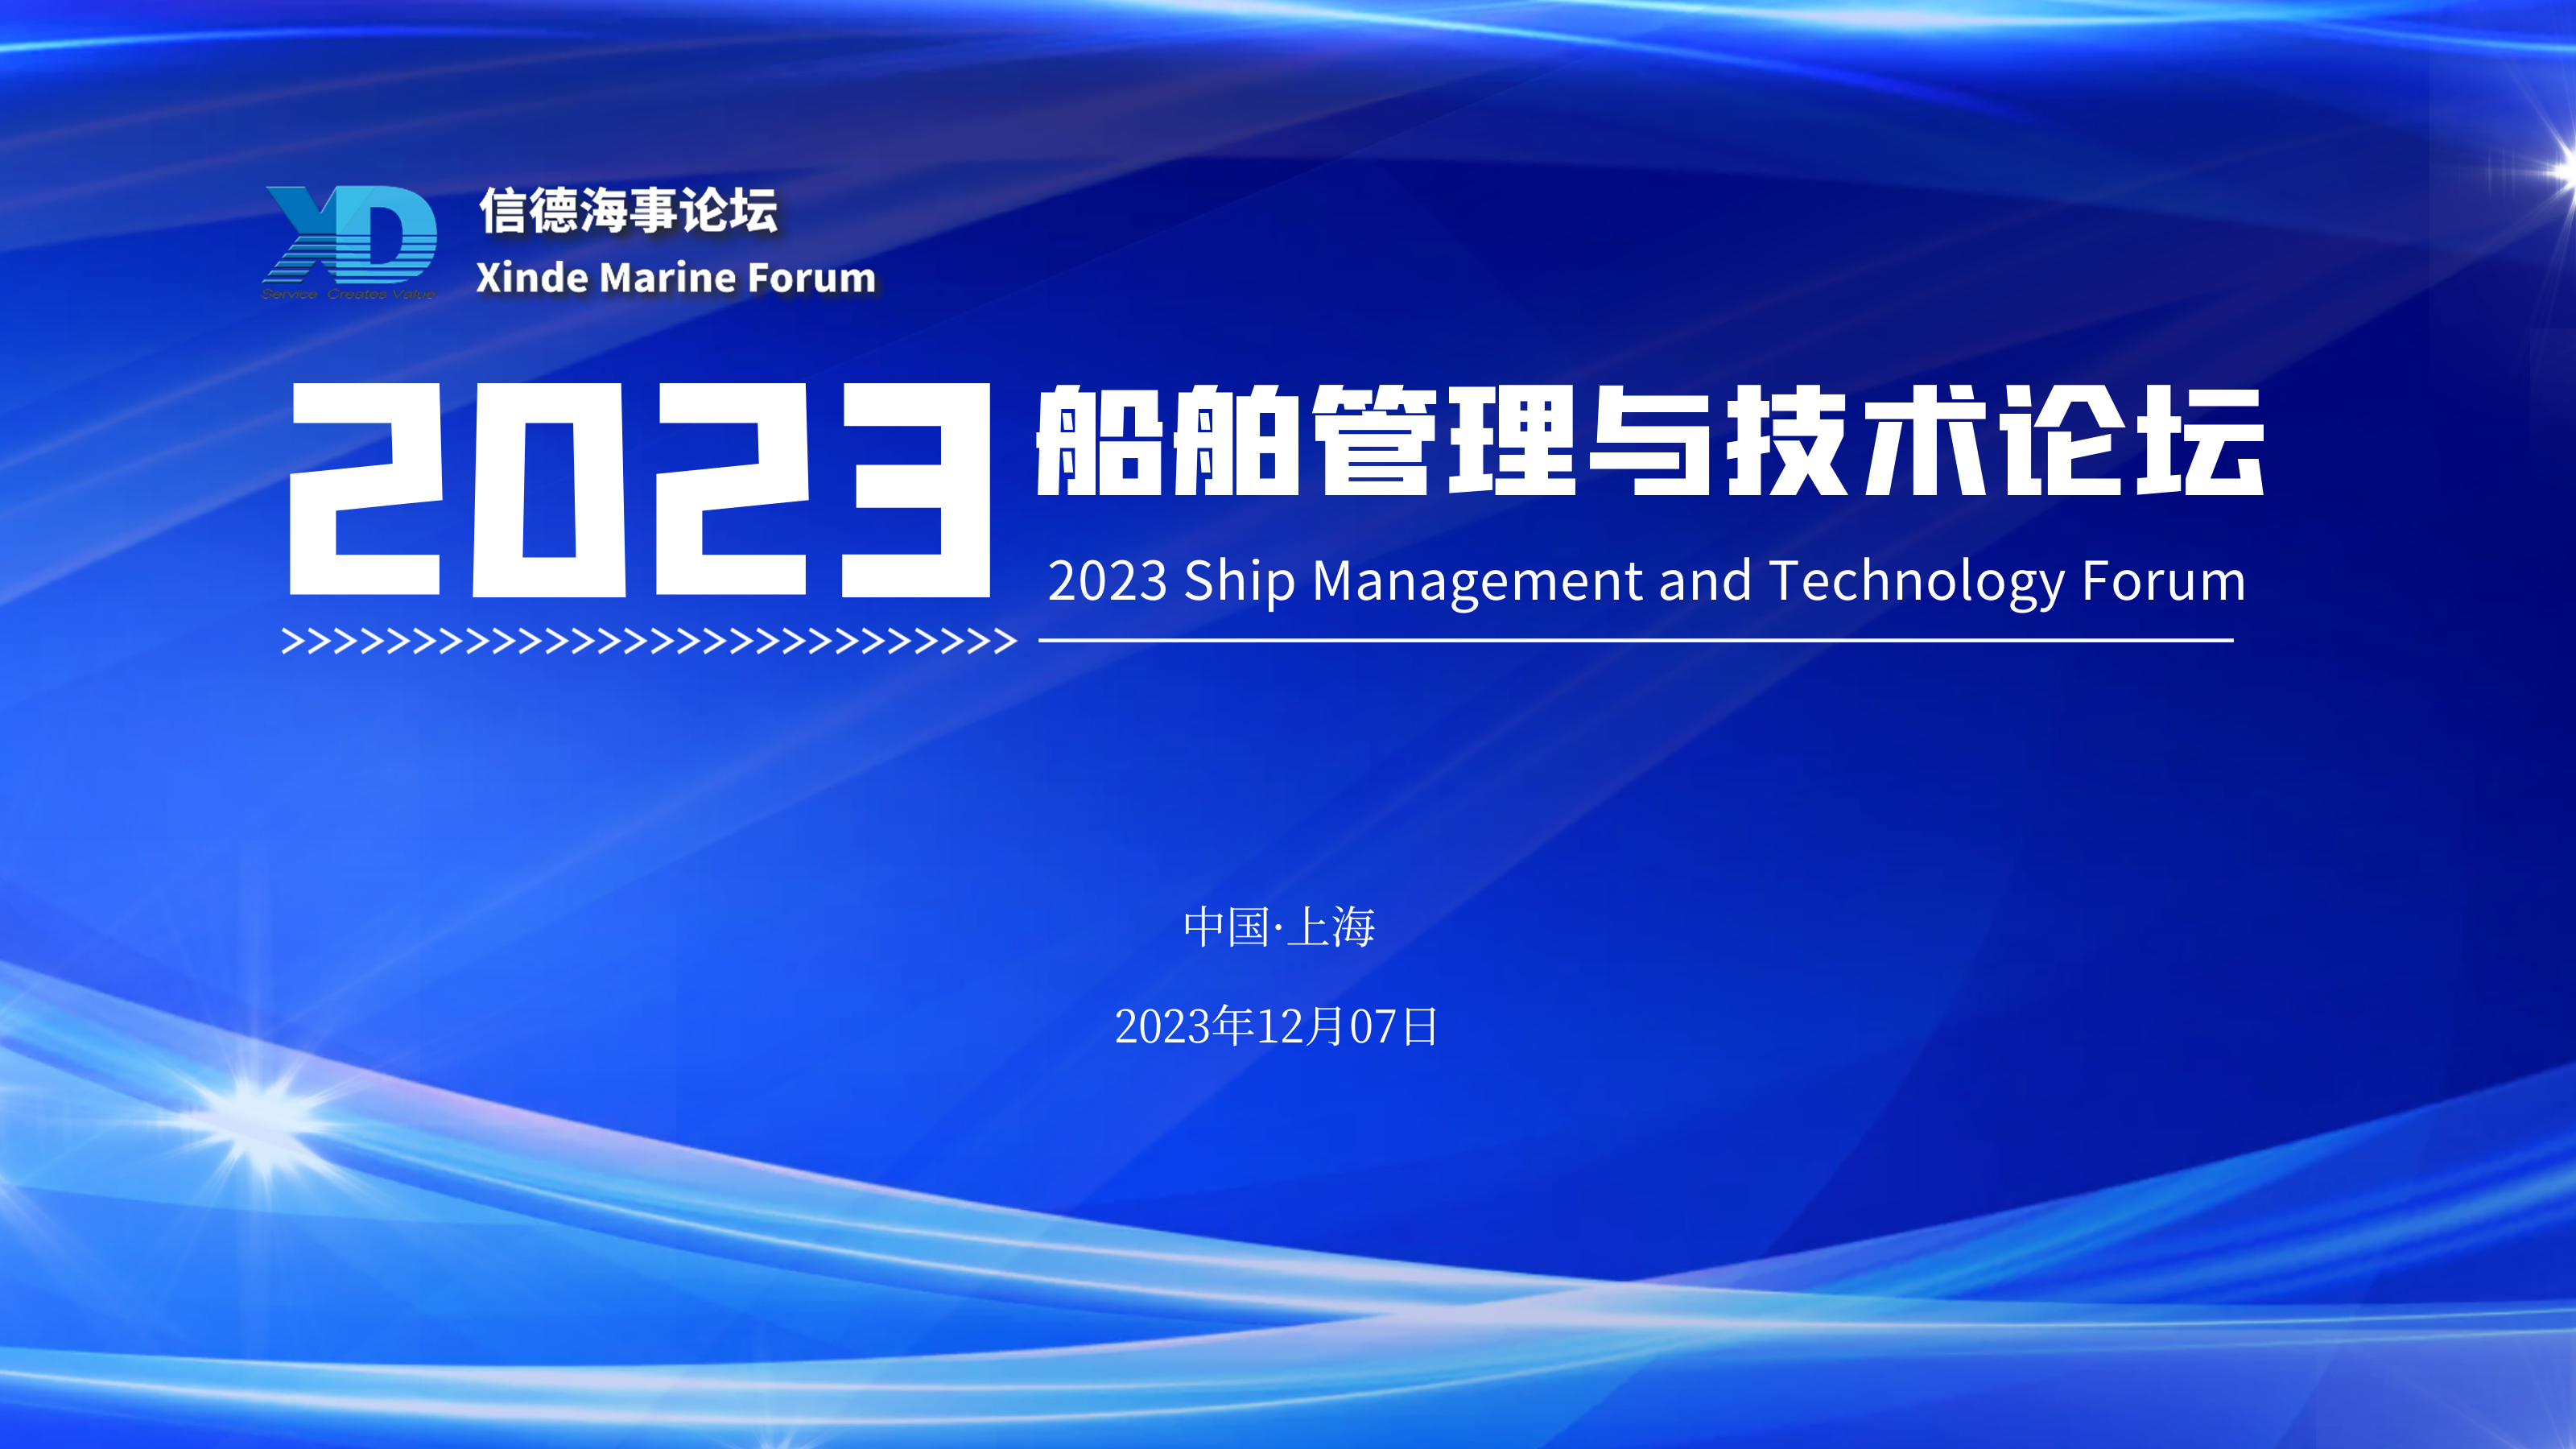 Xinde Marine Forum：2023 Ship Management